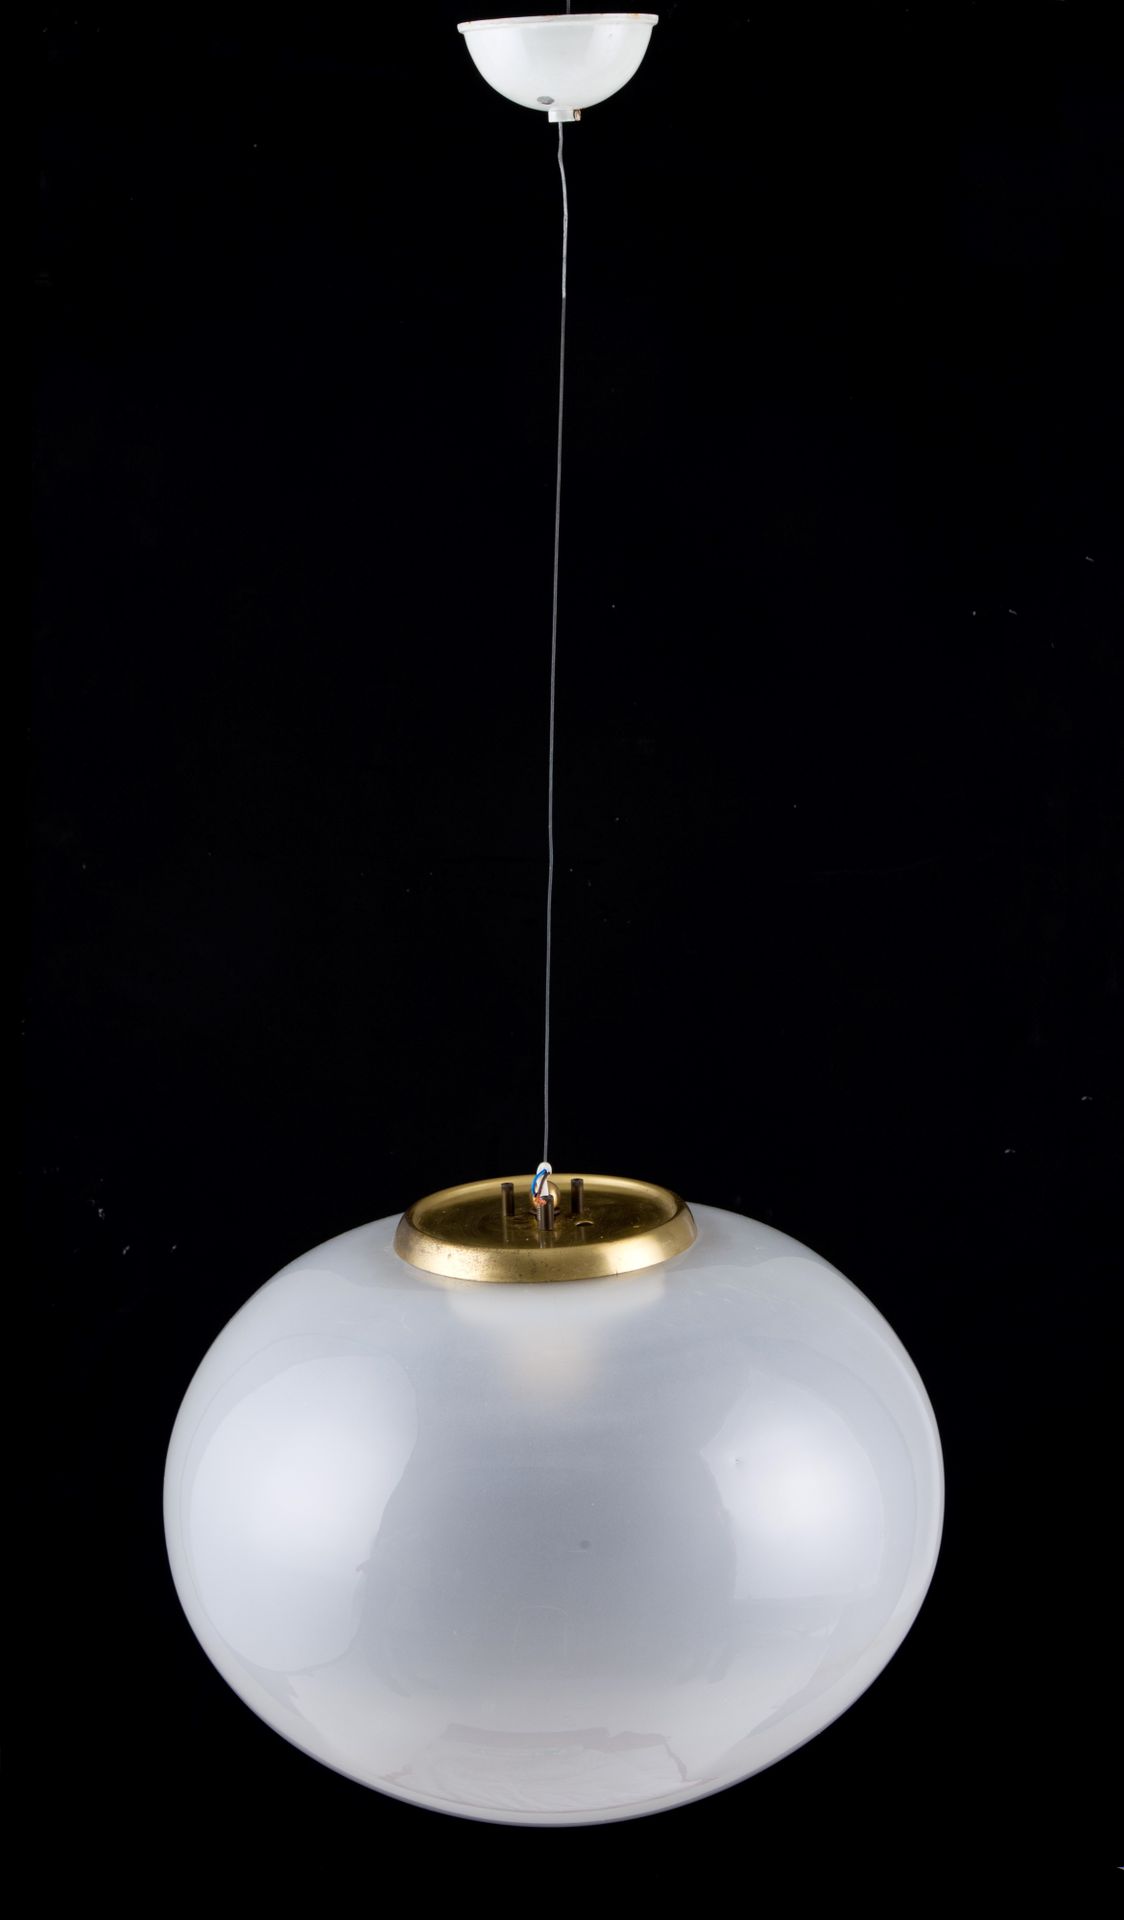 Pendant lamp 带白色乳白玻璃球的悬挂灯。1970s.长约 100x40 厘米。